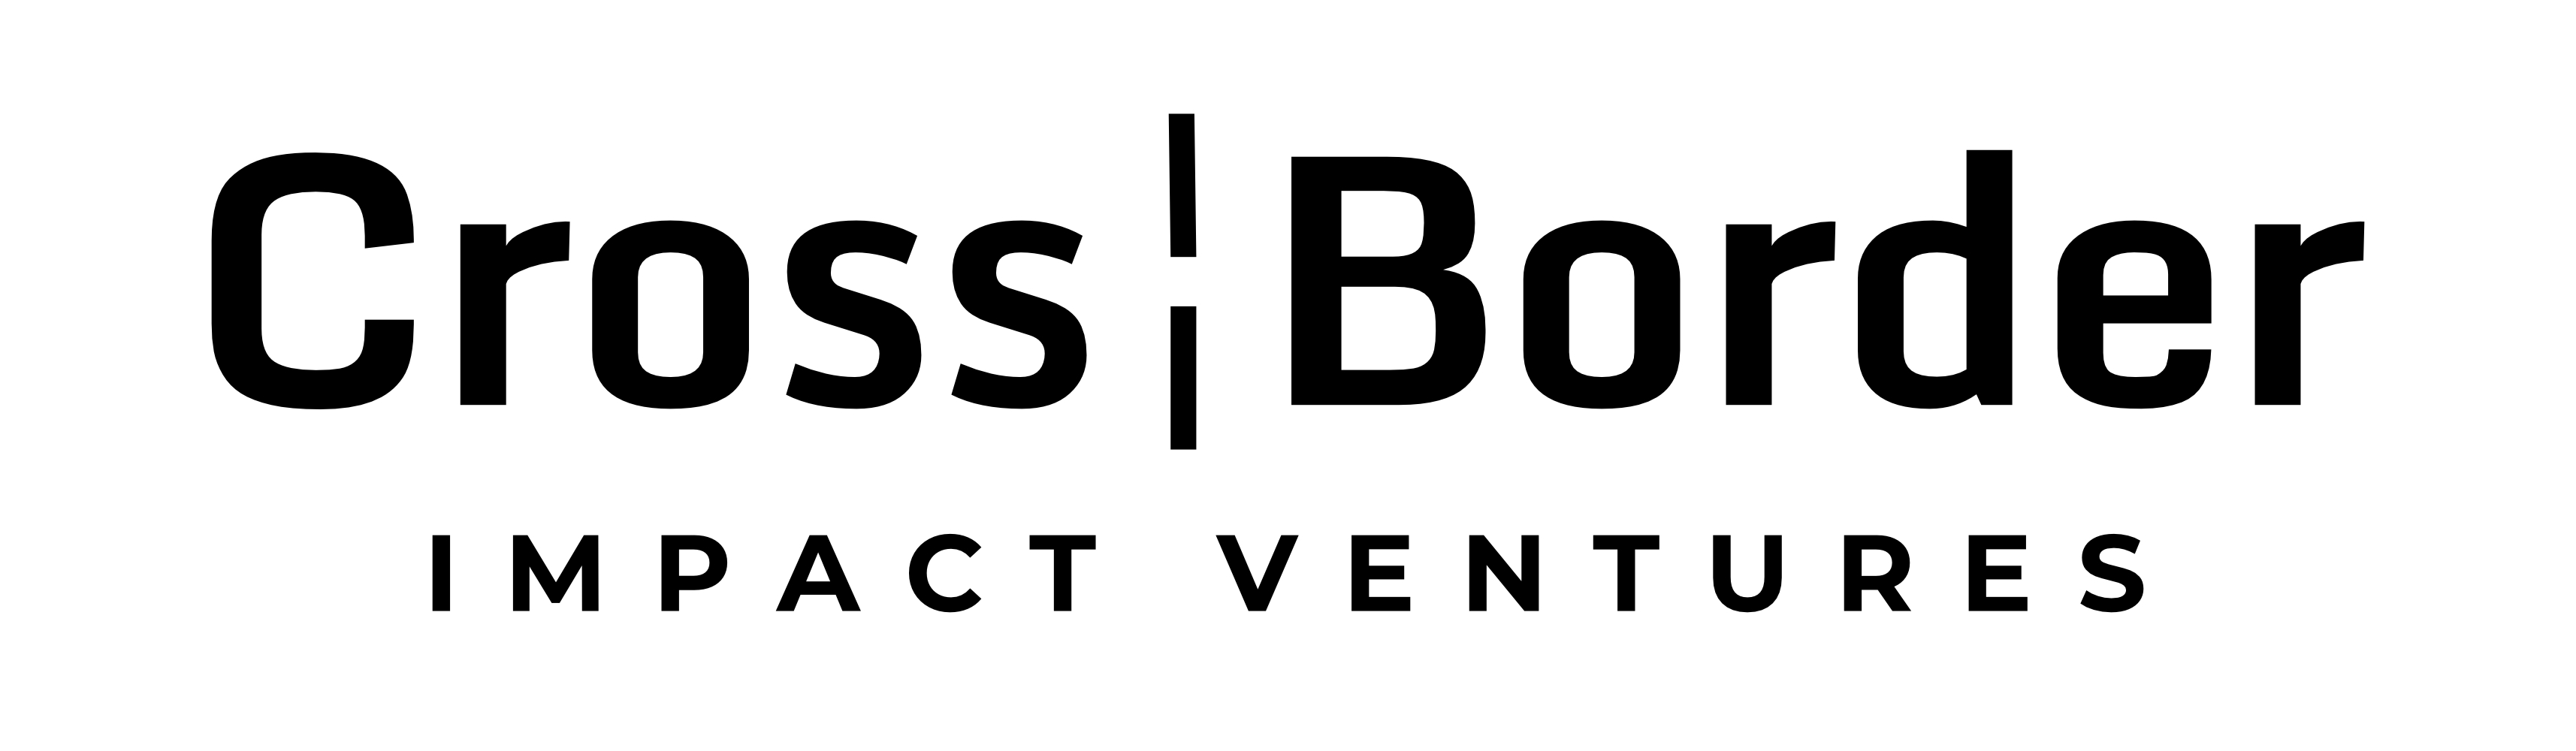 Cross-Border Impact Ventures